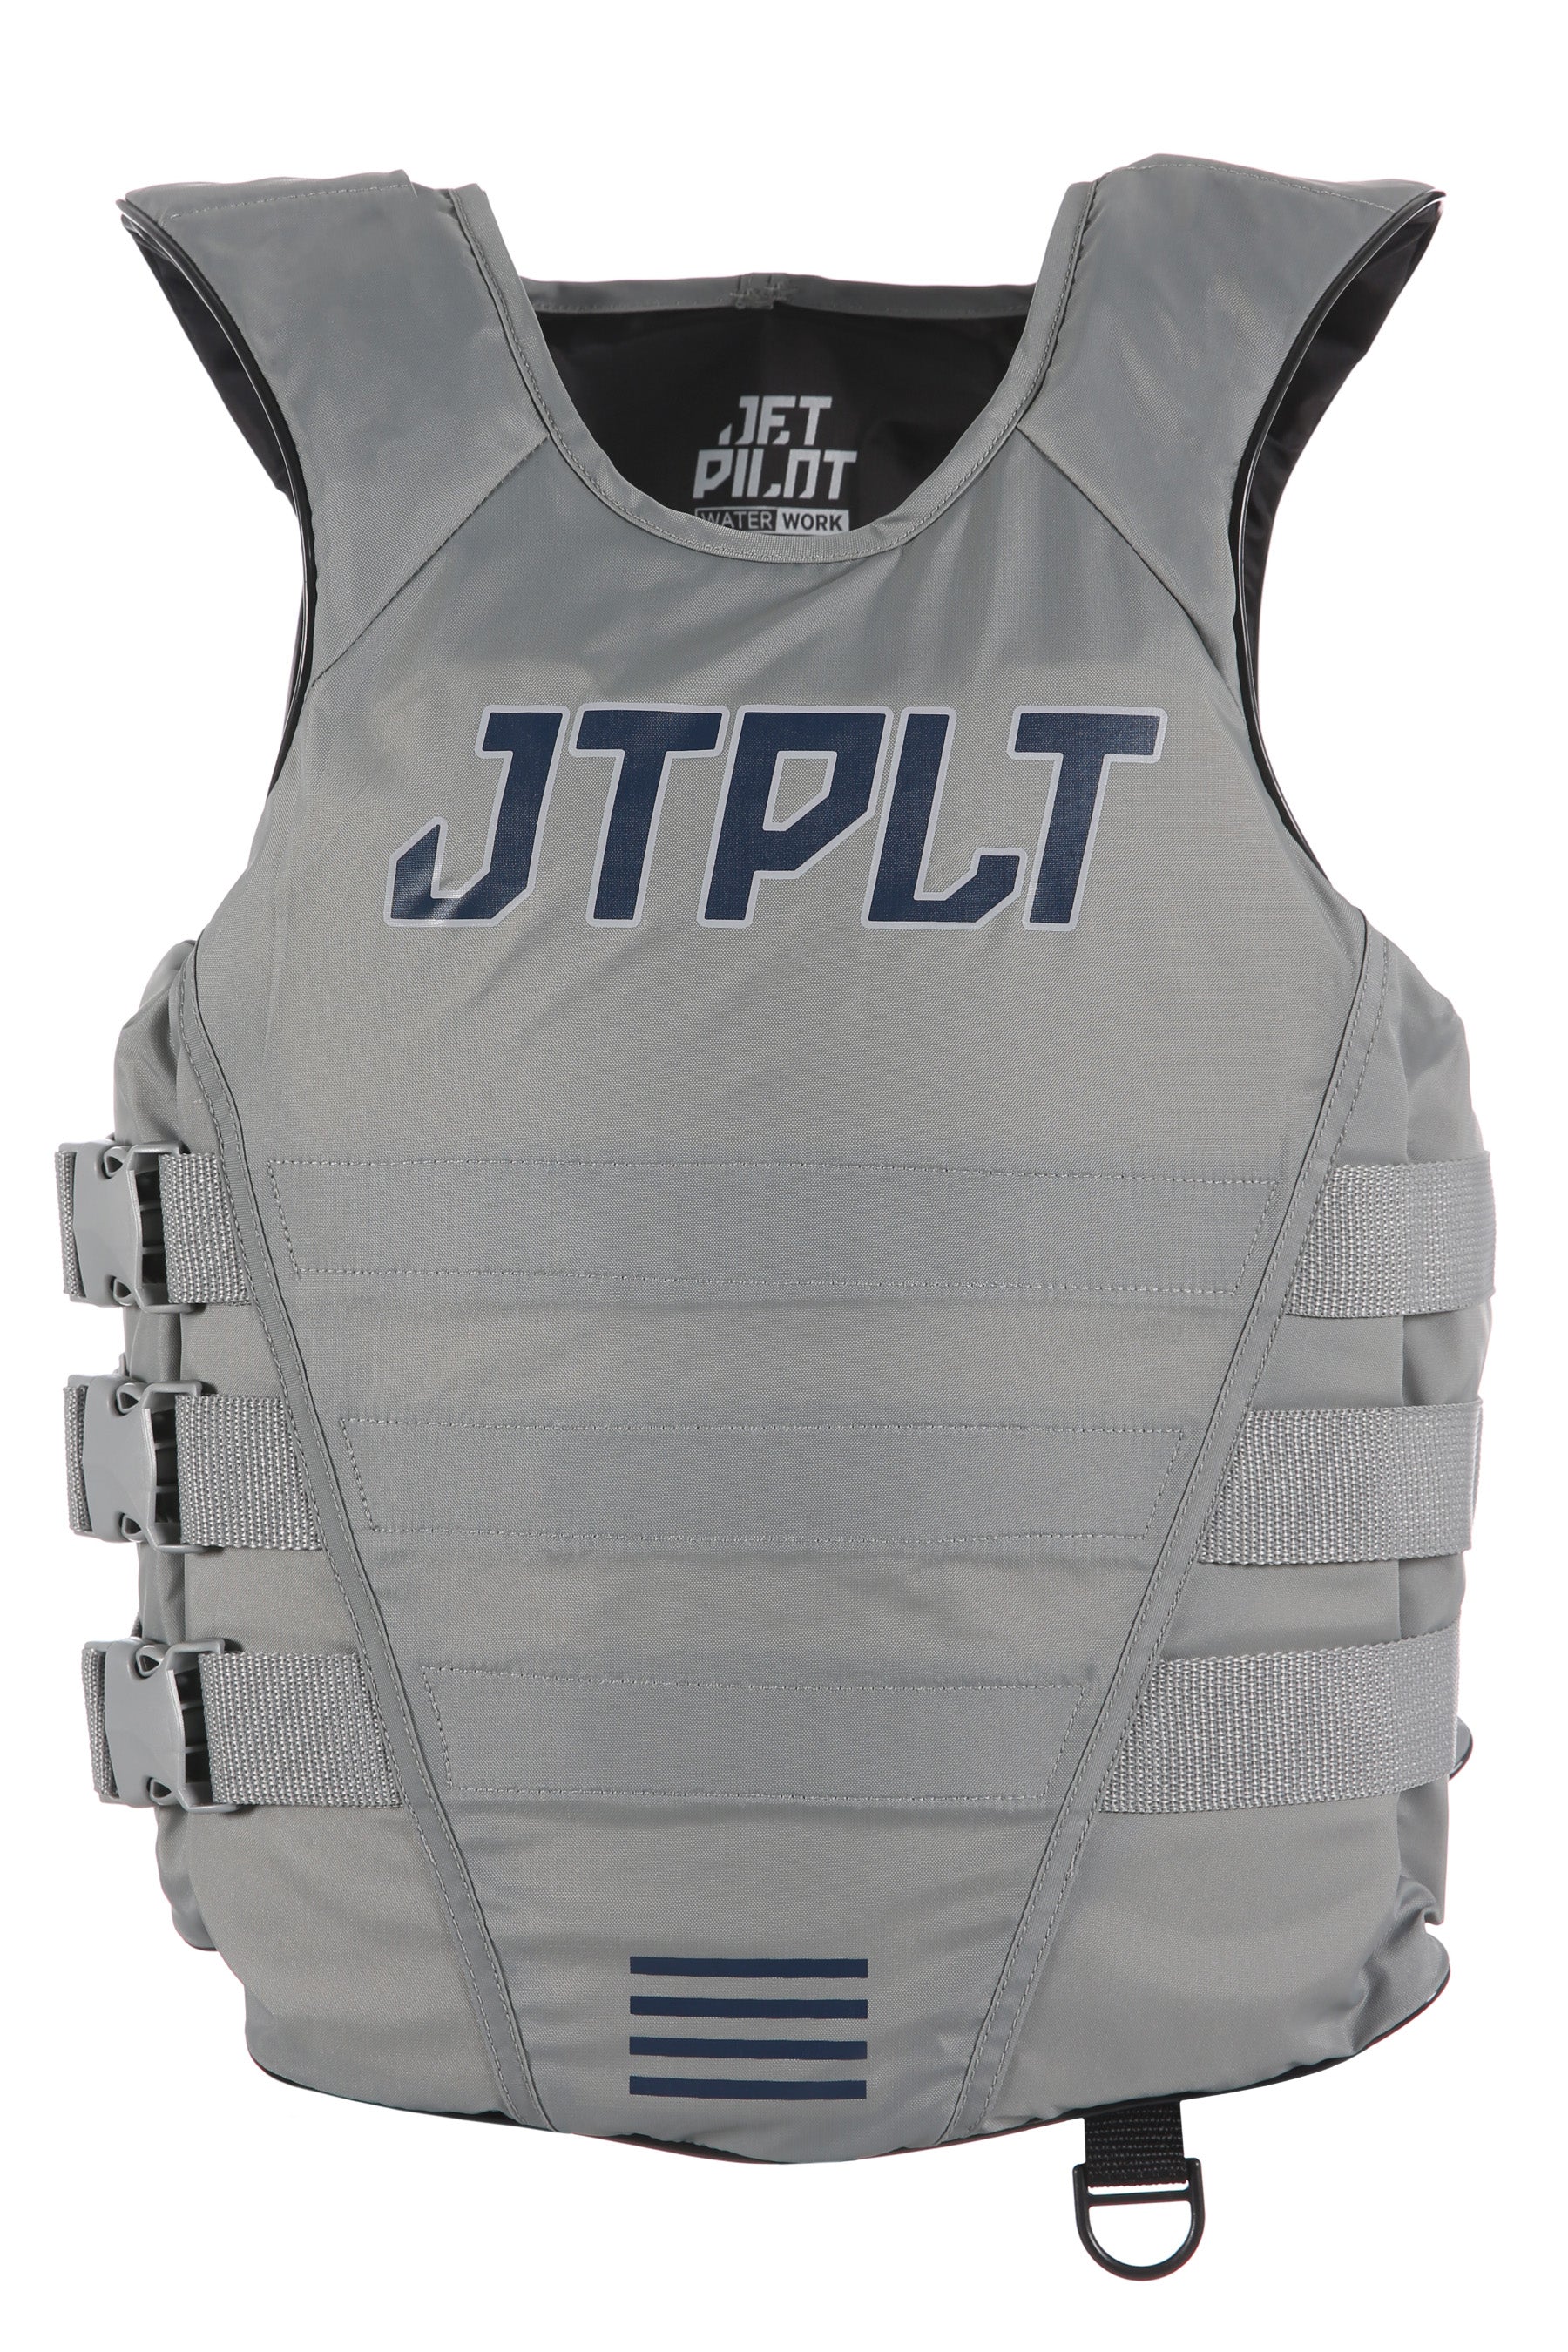 Jetpilot Rx Vault Mens Nylon Life Jacket - Grey